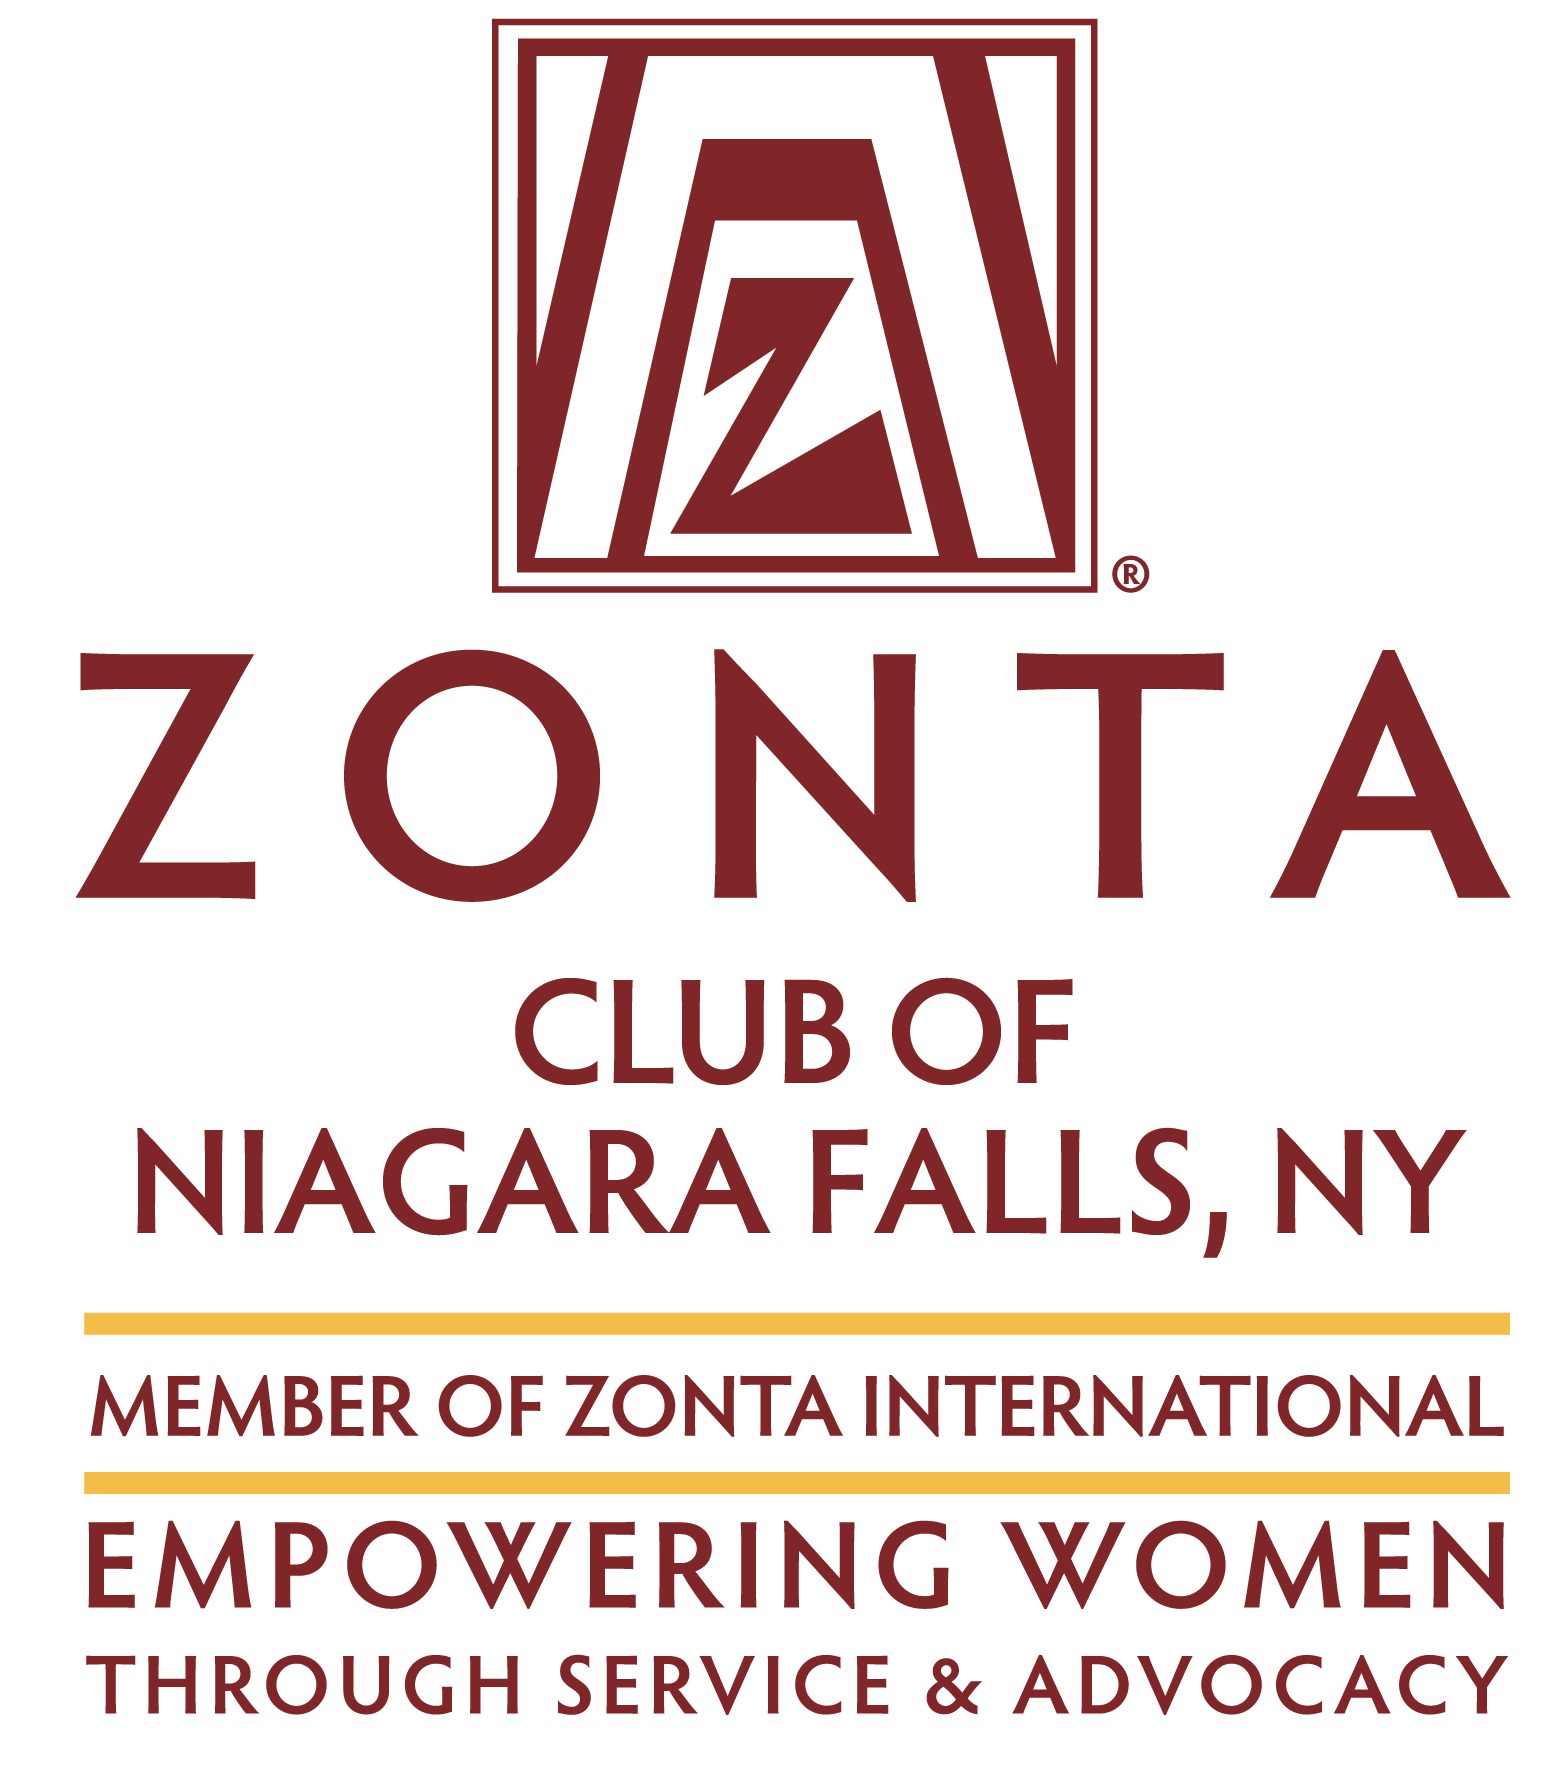 Zonta Club of Niagara Falls, New York